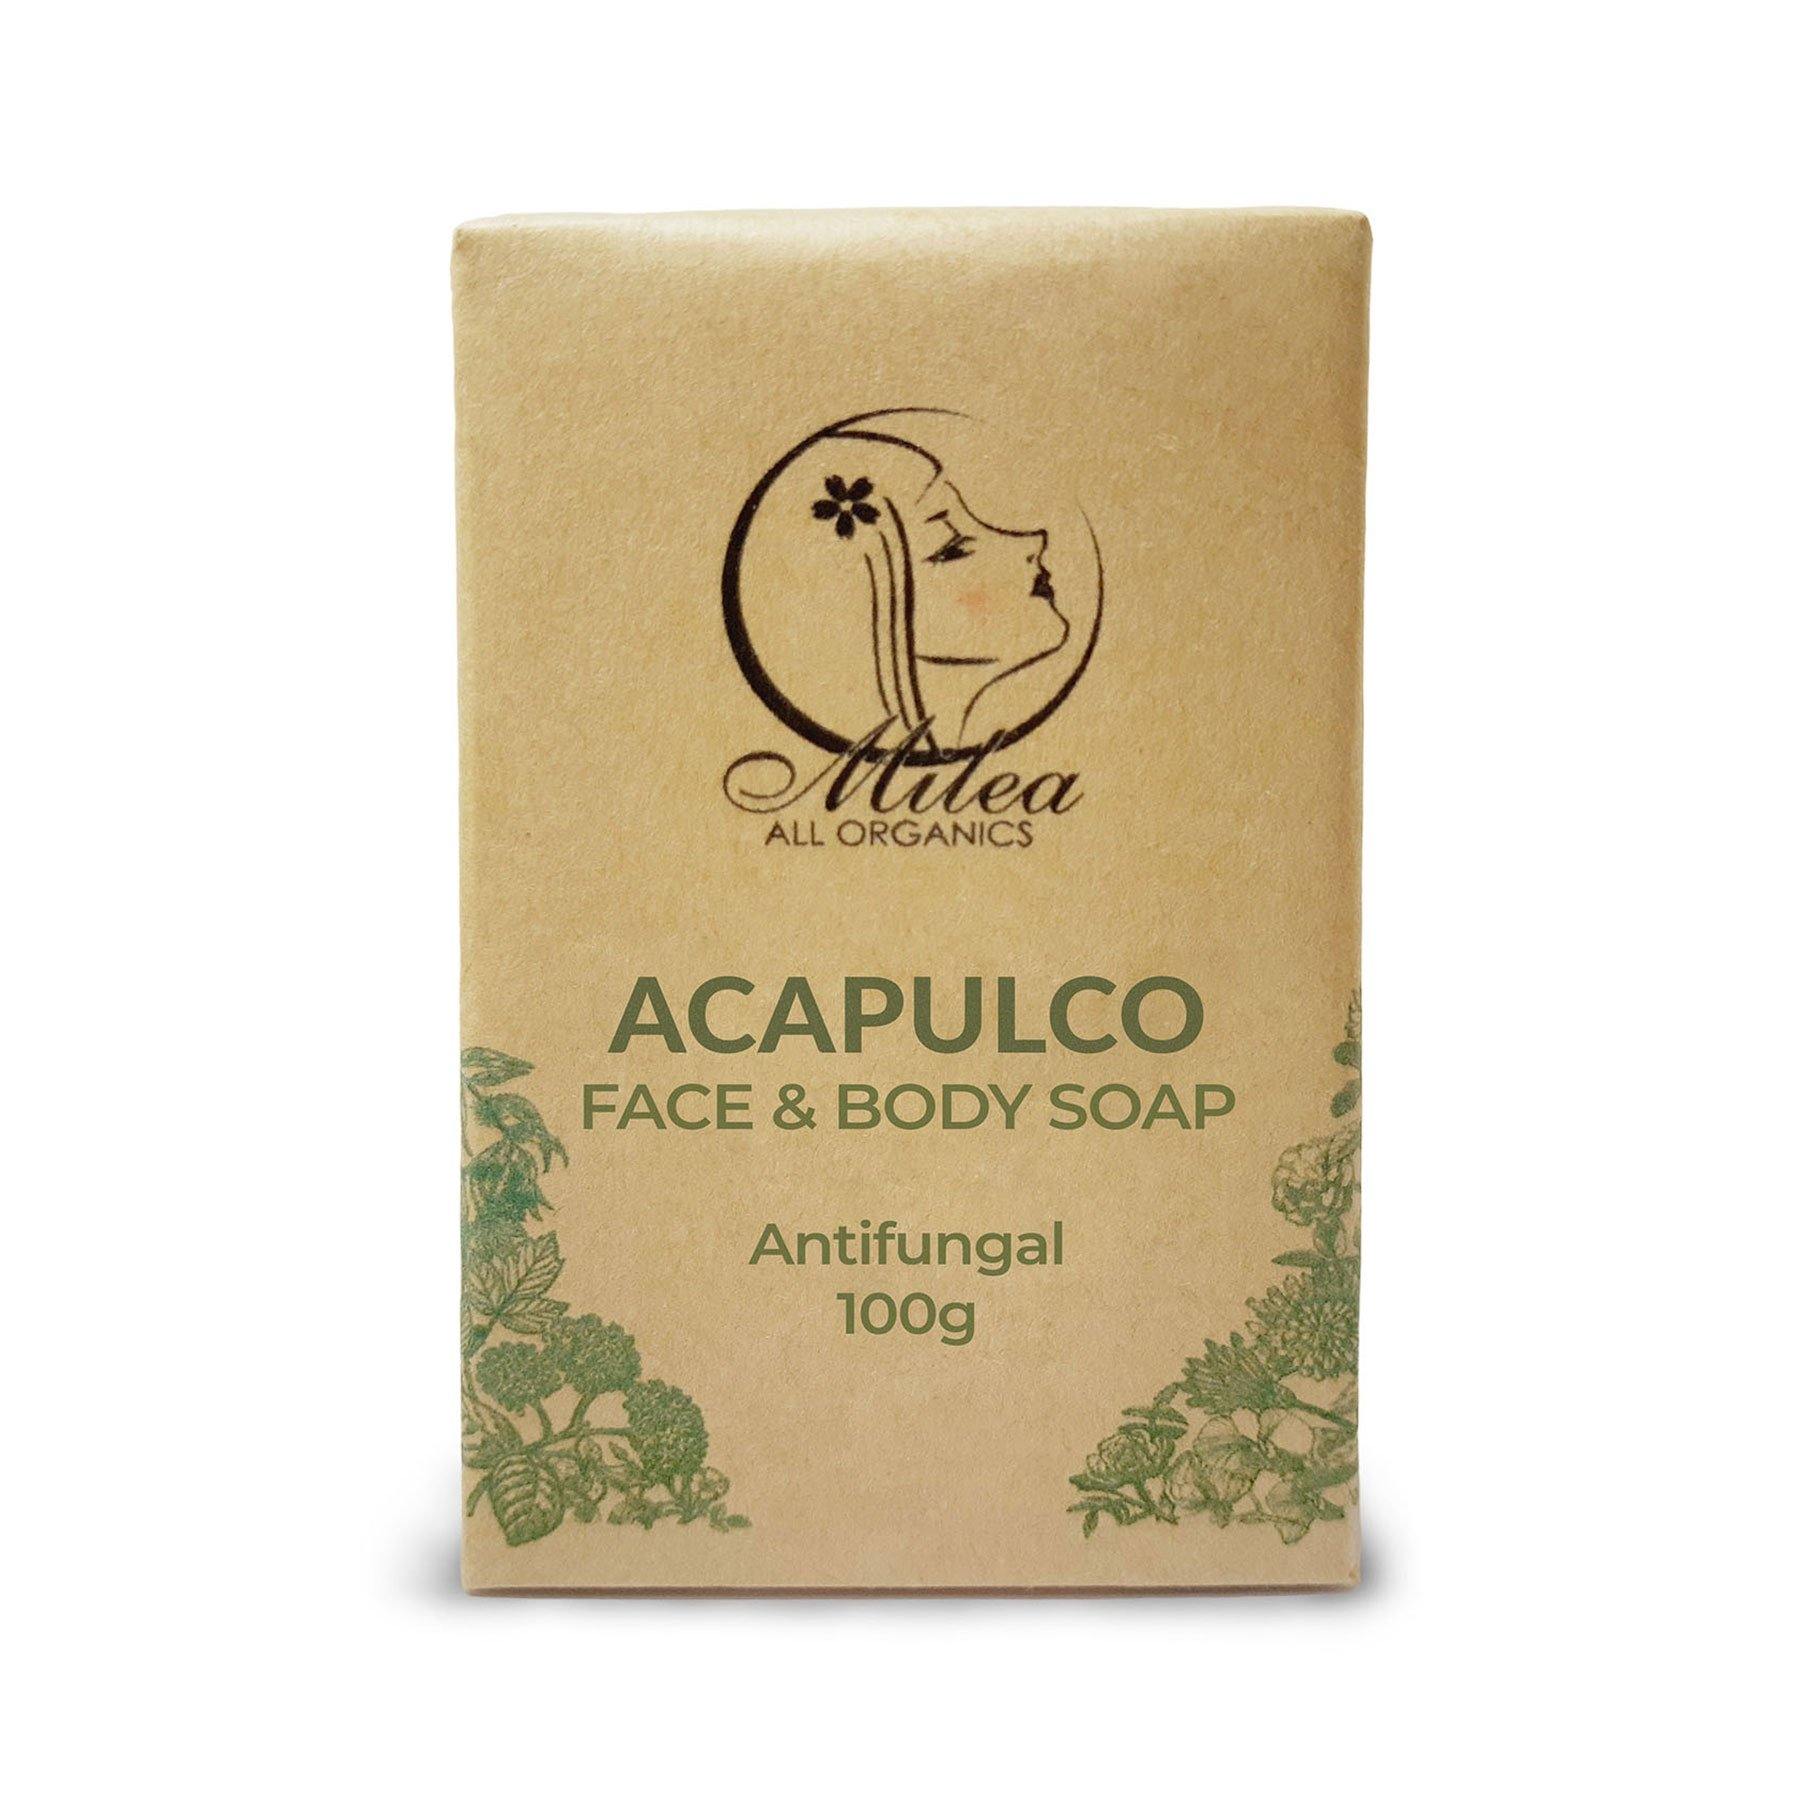 Acapulco Antifungal Soap Soaps Milea All Organics 100g 